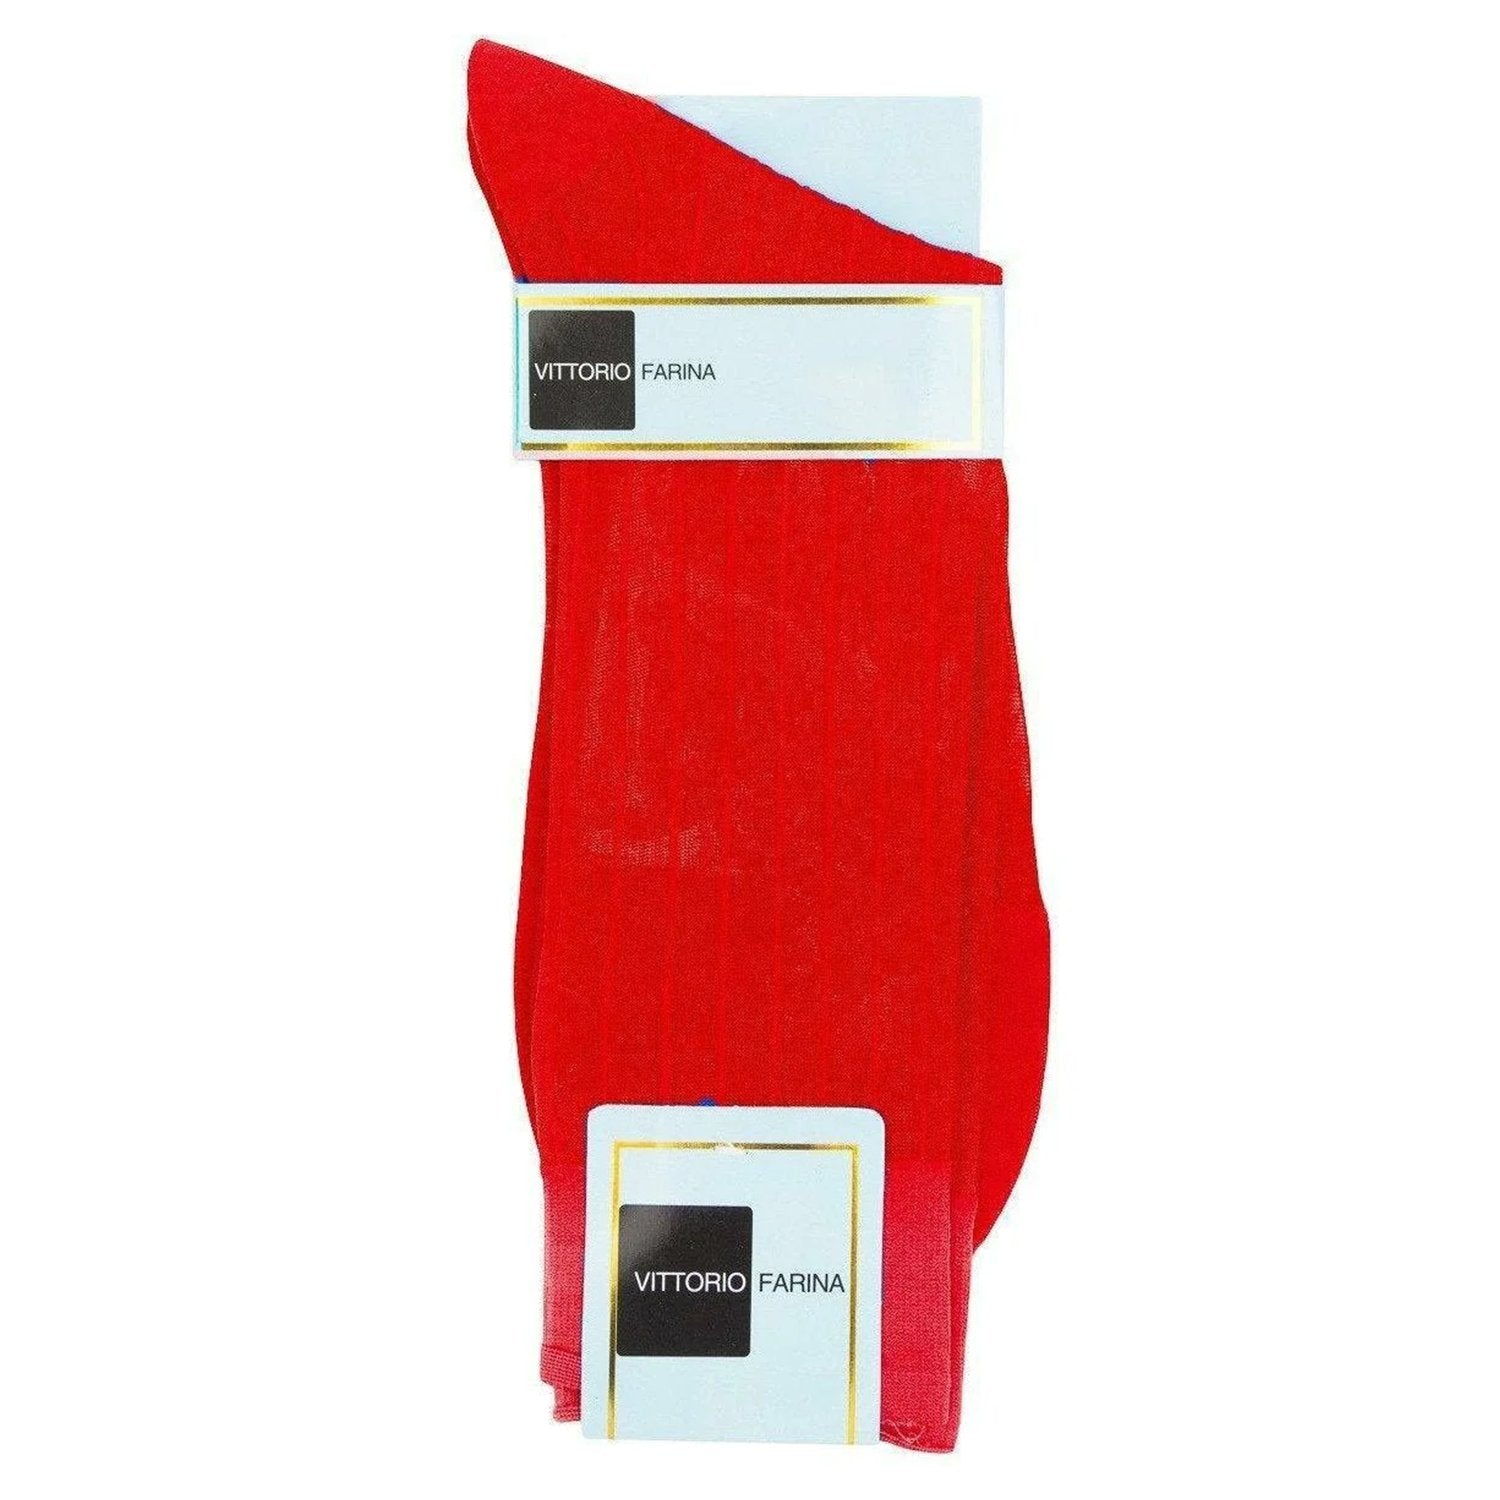 Vittorio Farina Men's Vibrant Colorful Anklet Socks (Retail) by Classy Cufflinks - ank-red-3 - Classy Cufflinks